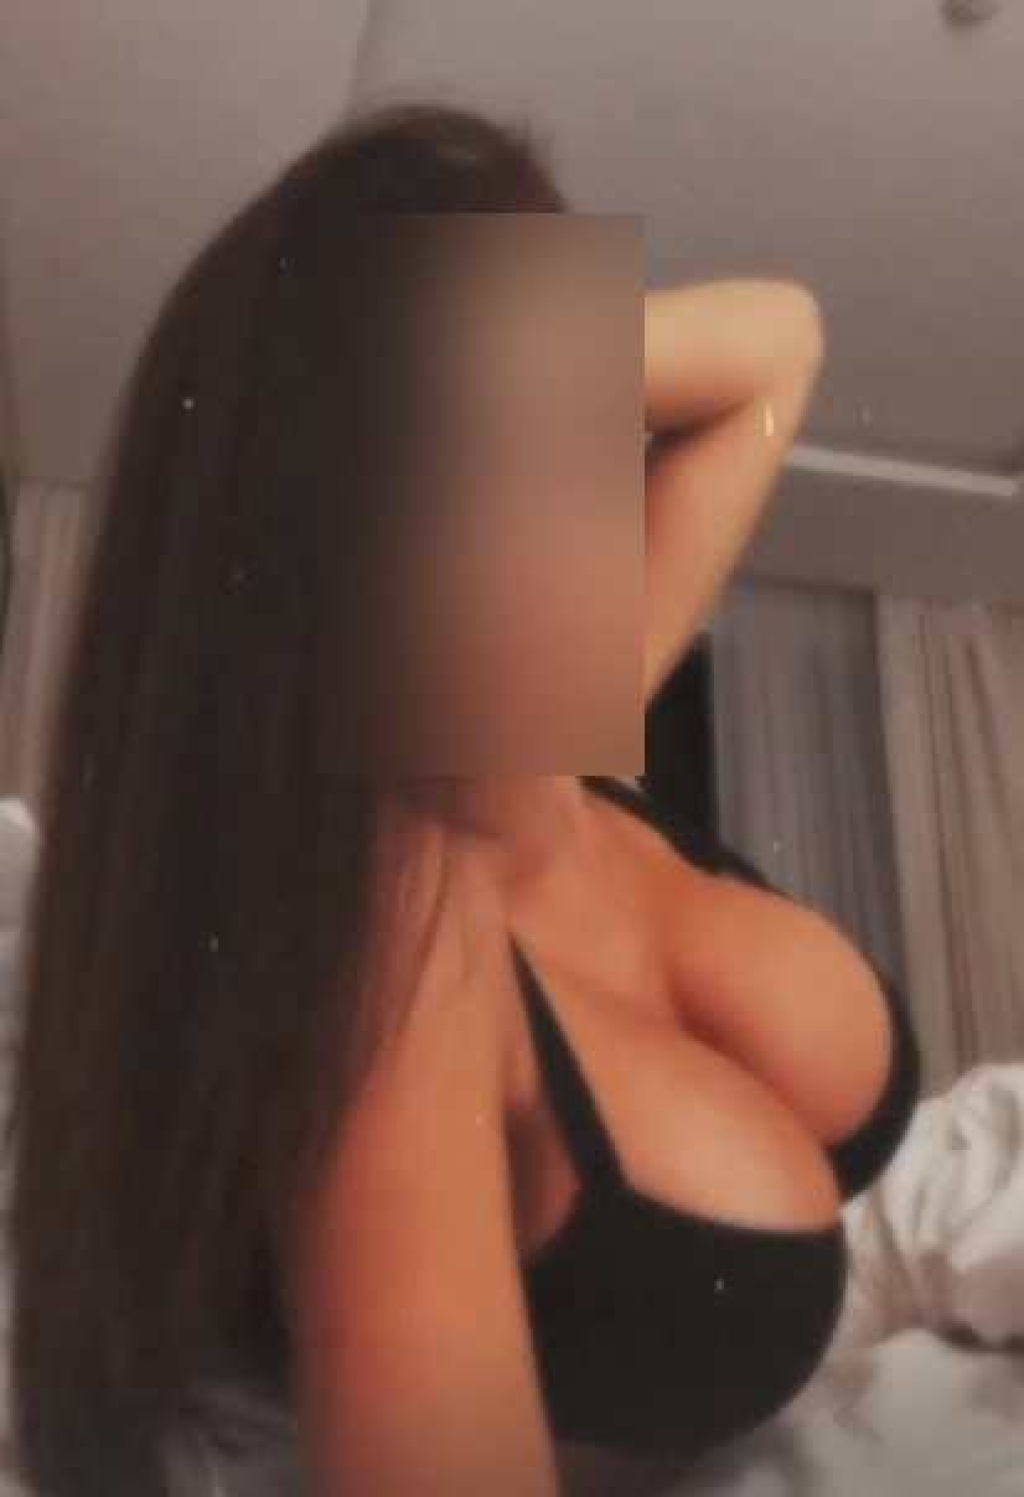 Марина: проститутки индивидуалки в Омске